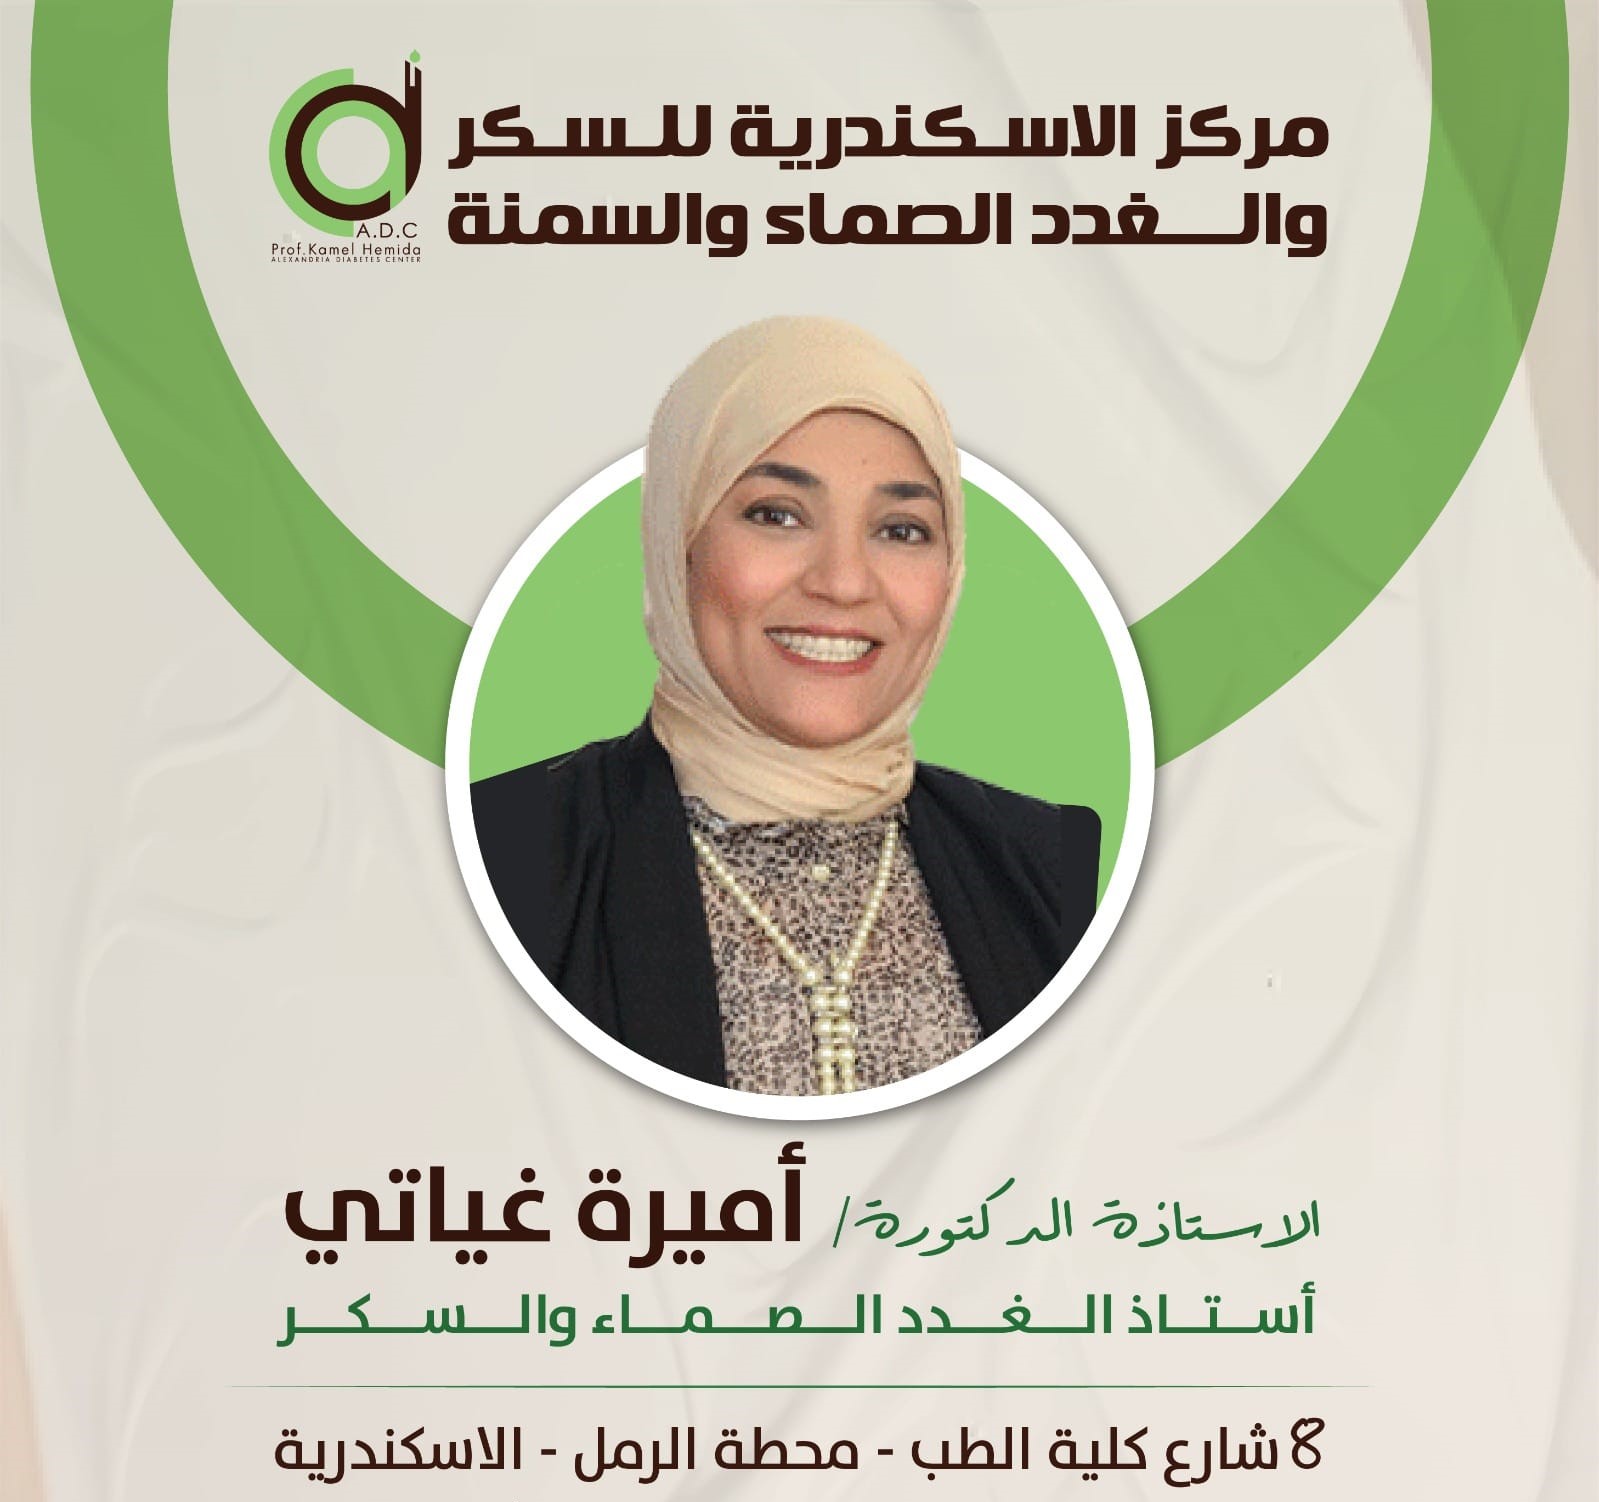 Dr. Amira Ghaiaty